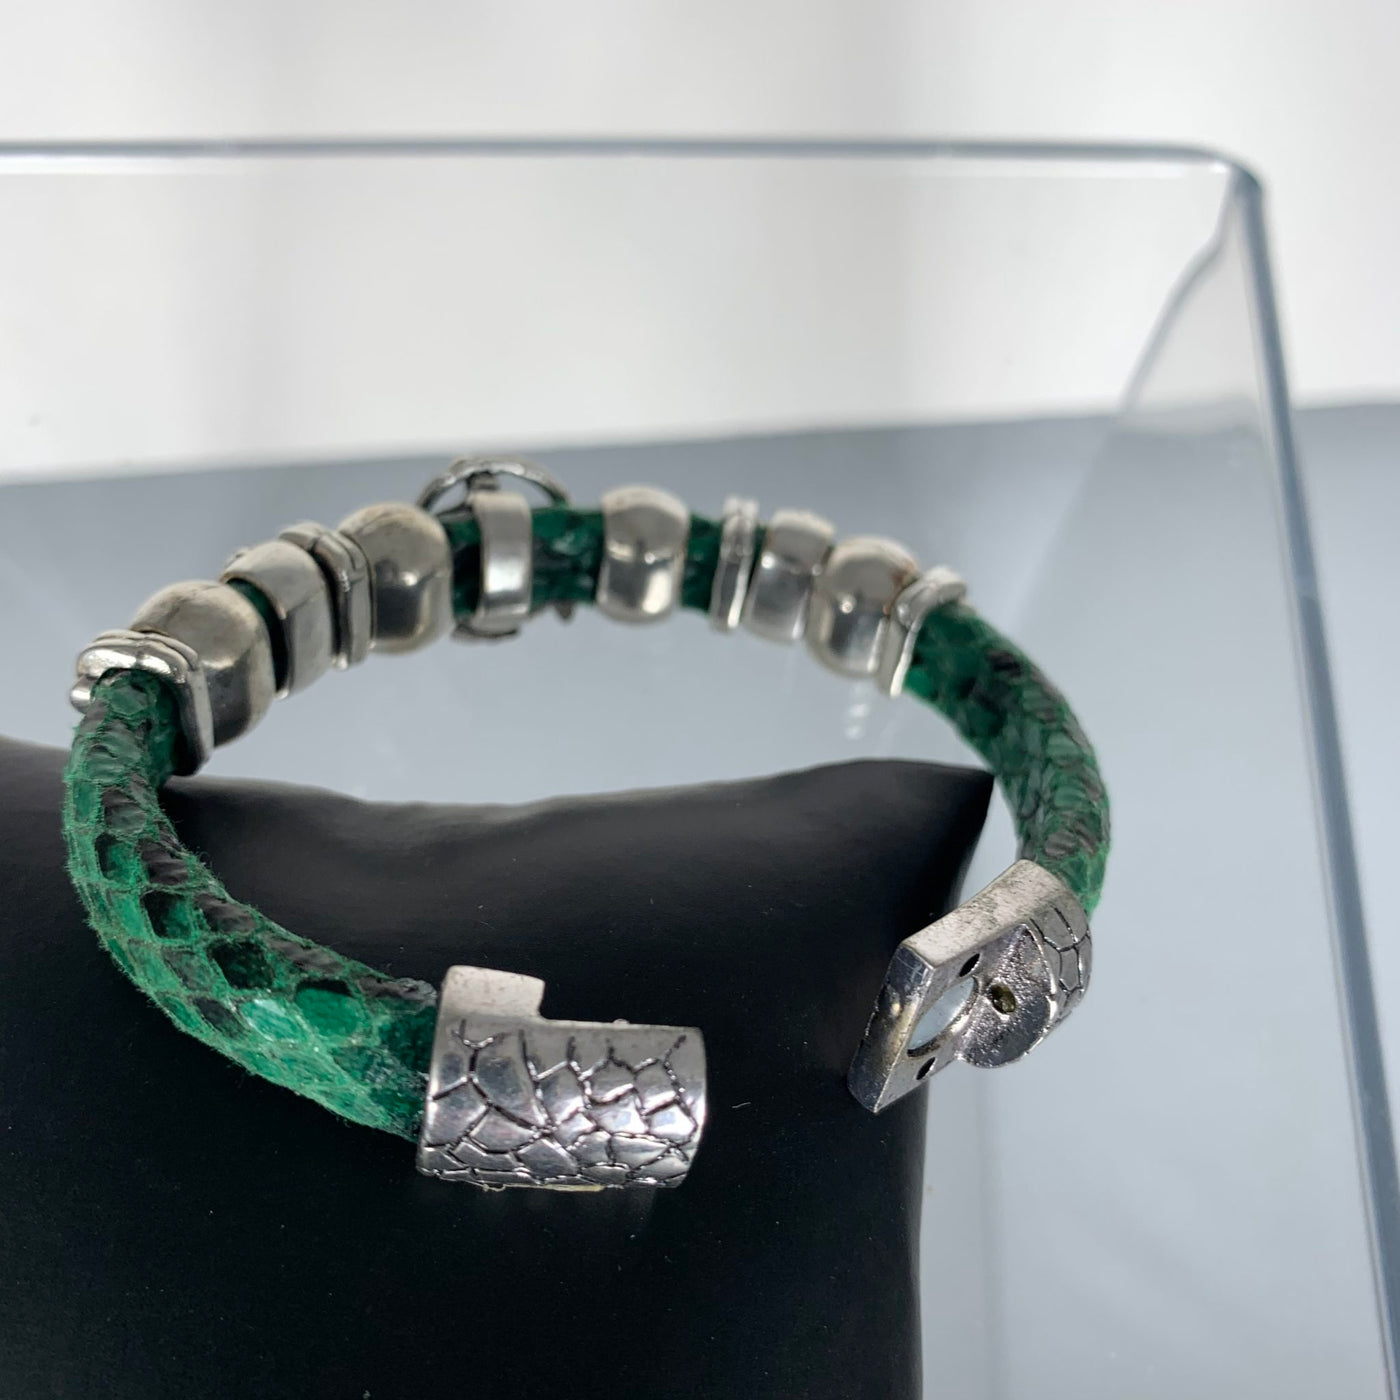 Green Faux Snake Skin Band Bracelet Featuring a Bird